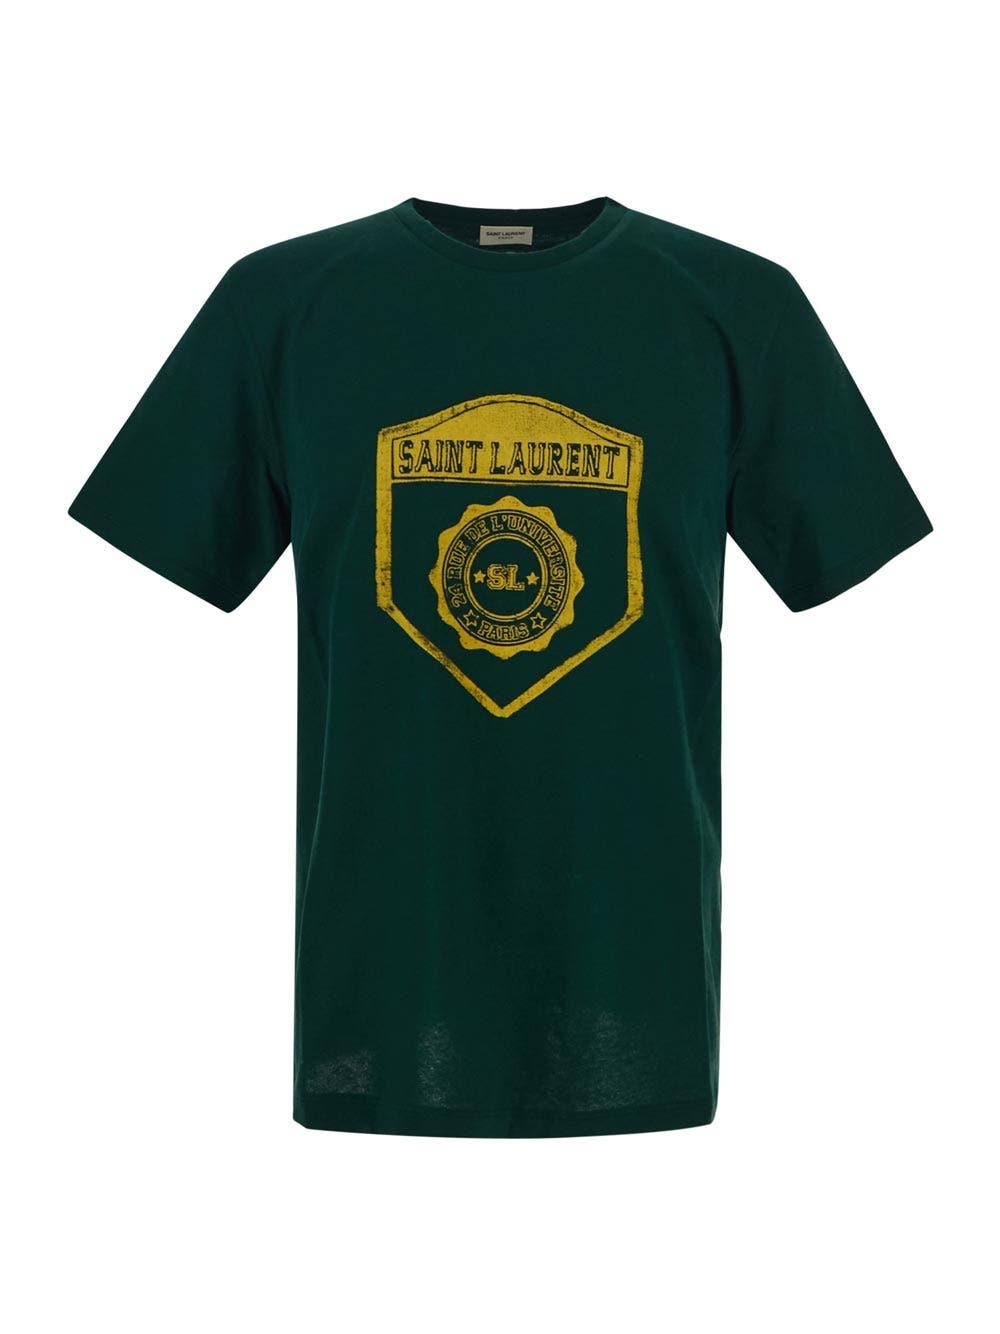 Saint Laurent green logo print t-shirt